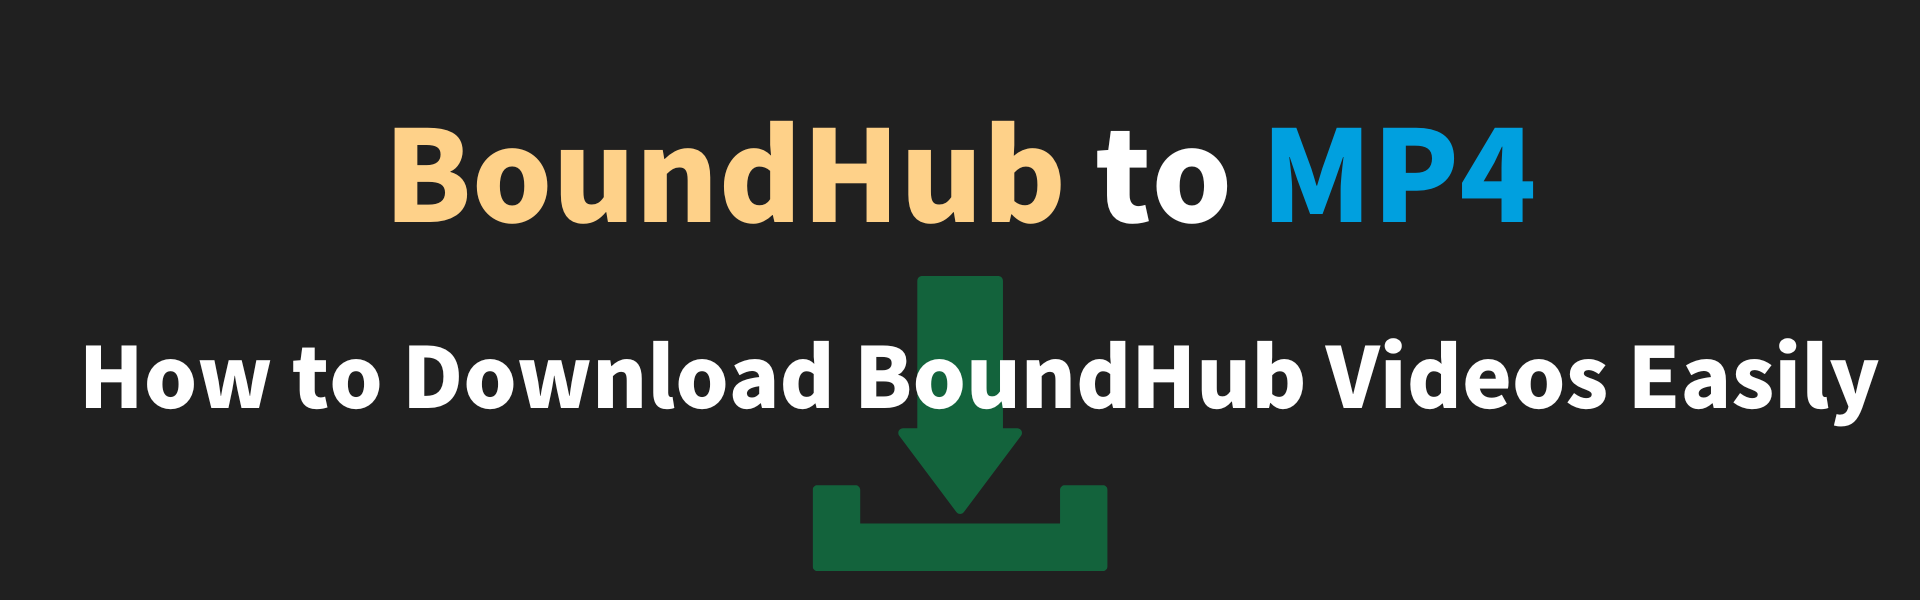 Boundhub video download